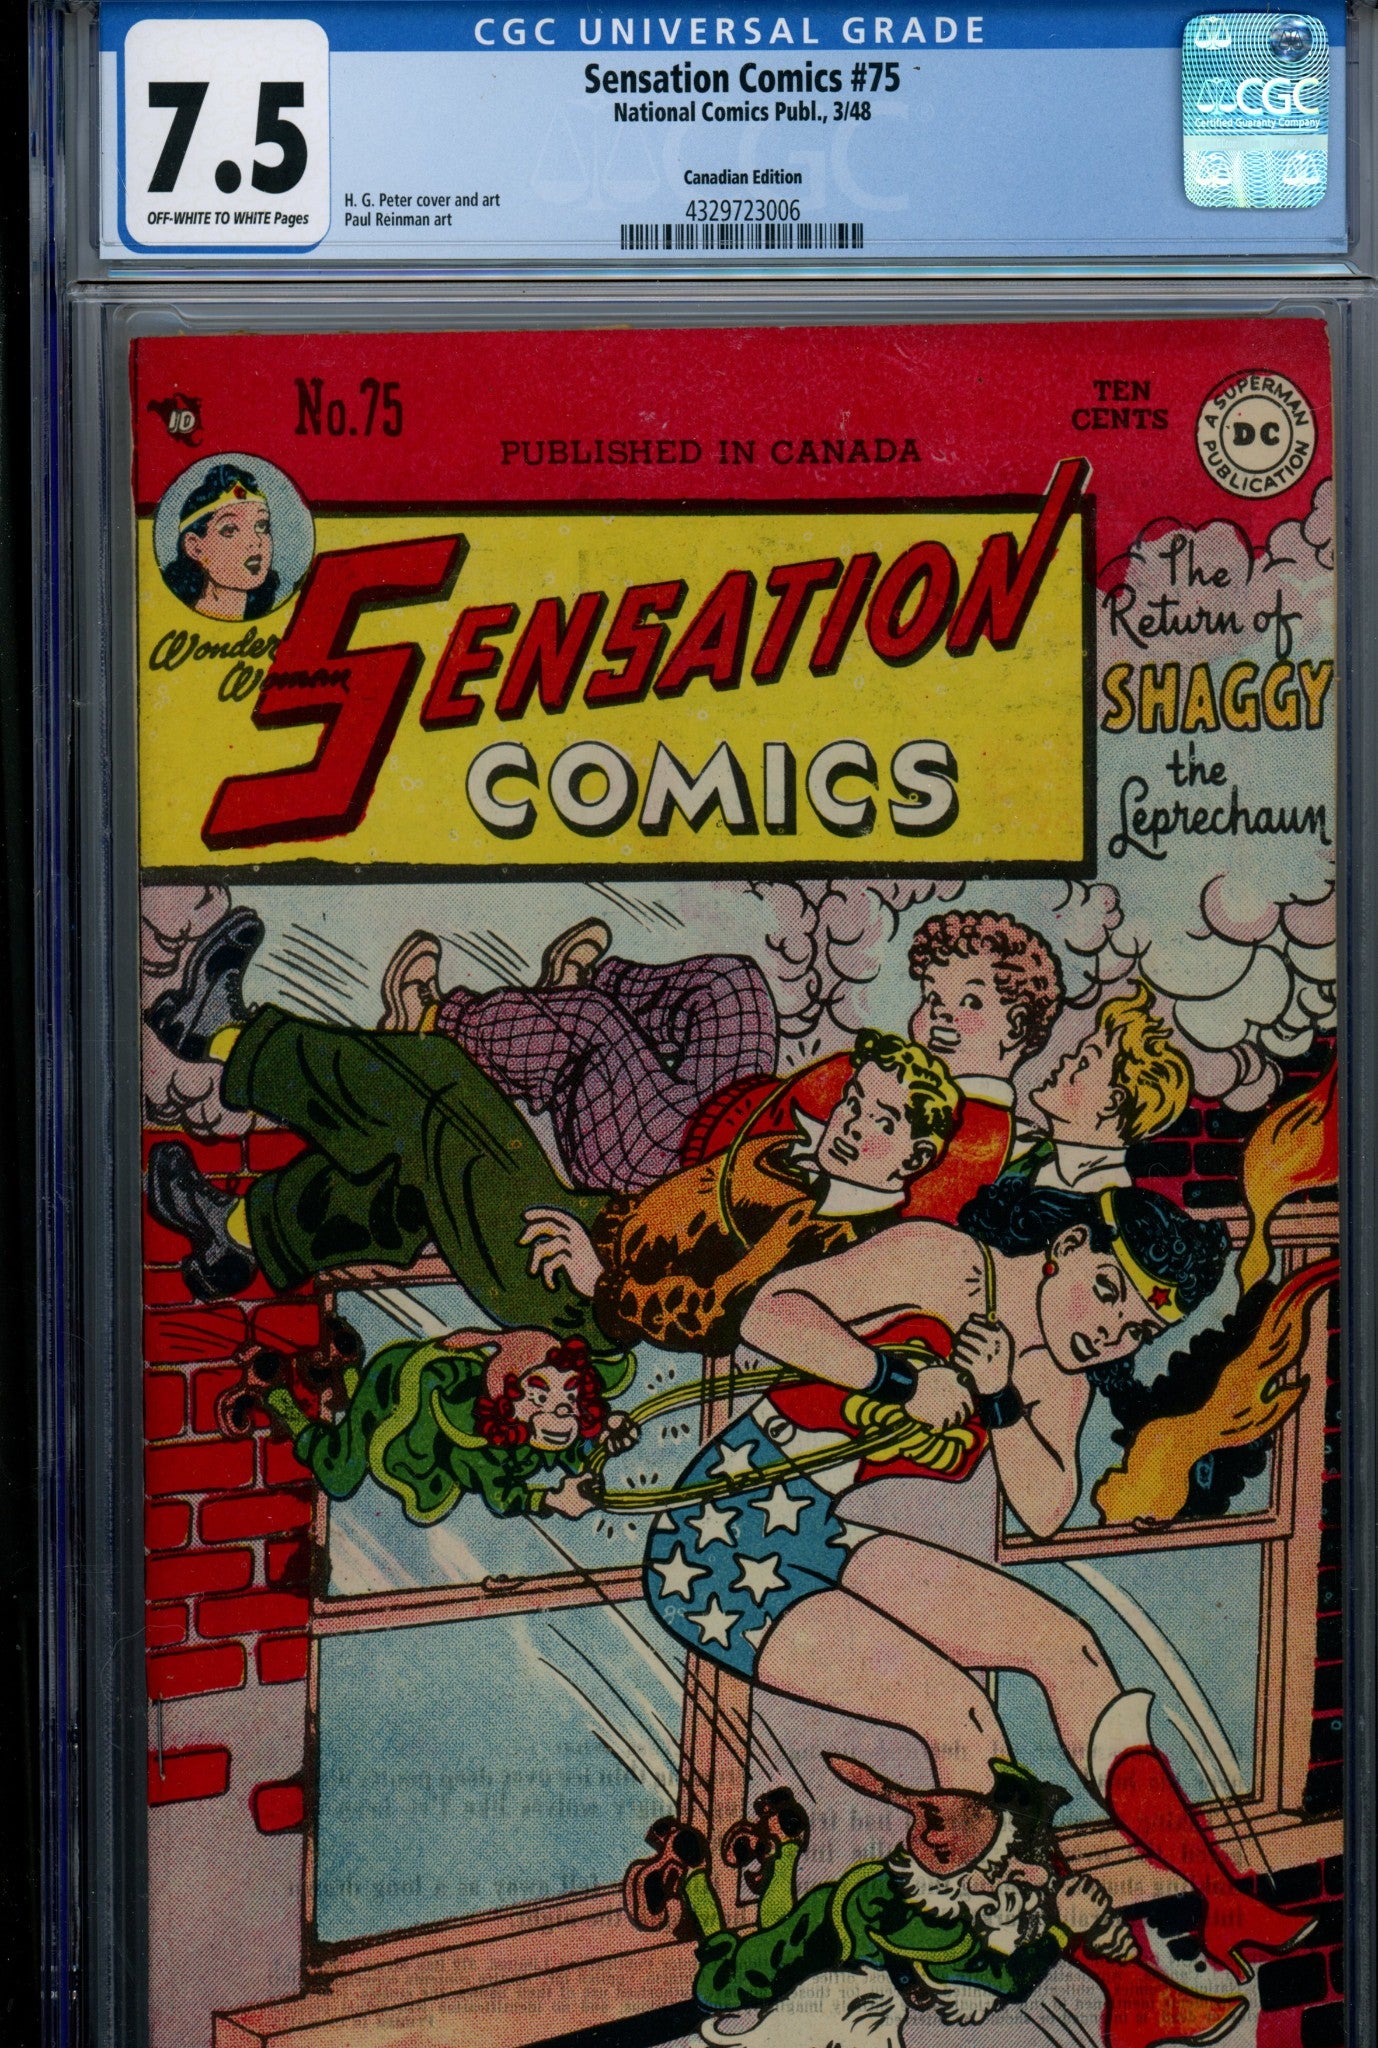 Sensation Comics Vol 1 75 Canadian Edition CGC 7.5 (VF-) (1948)